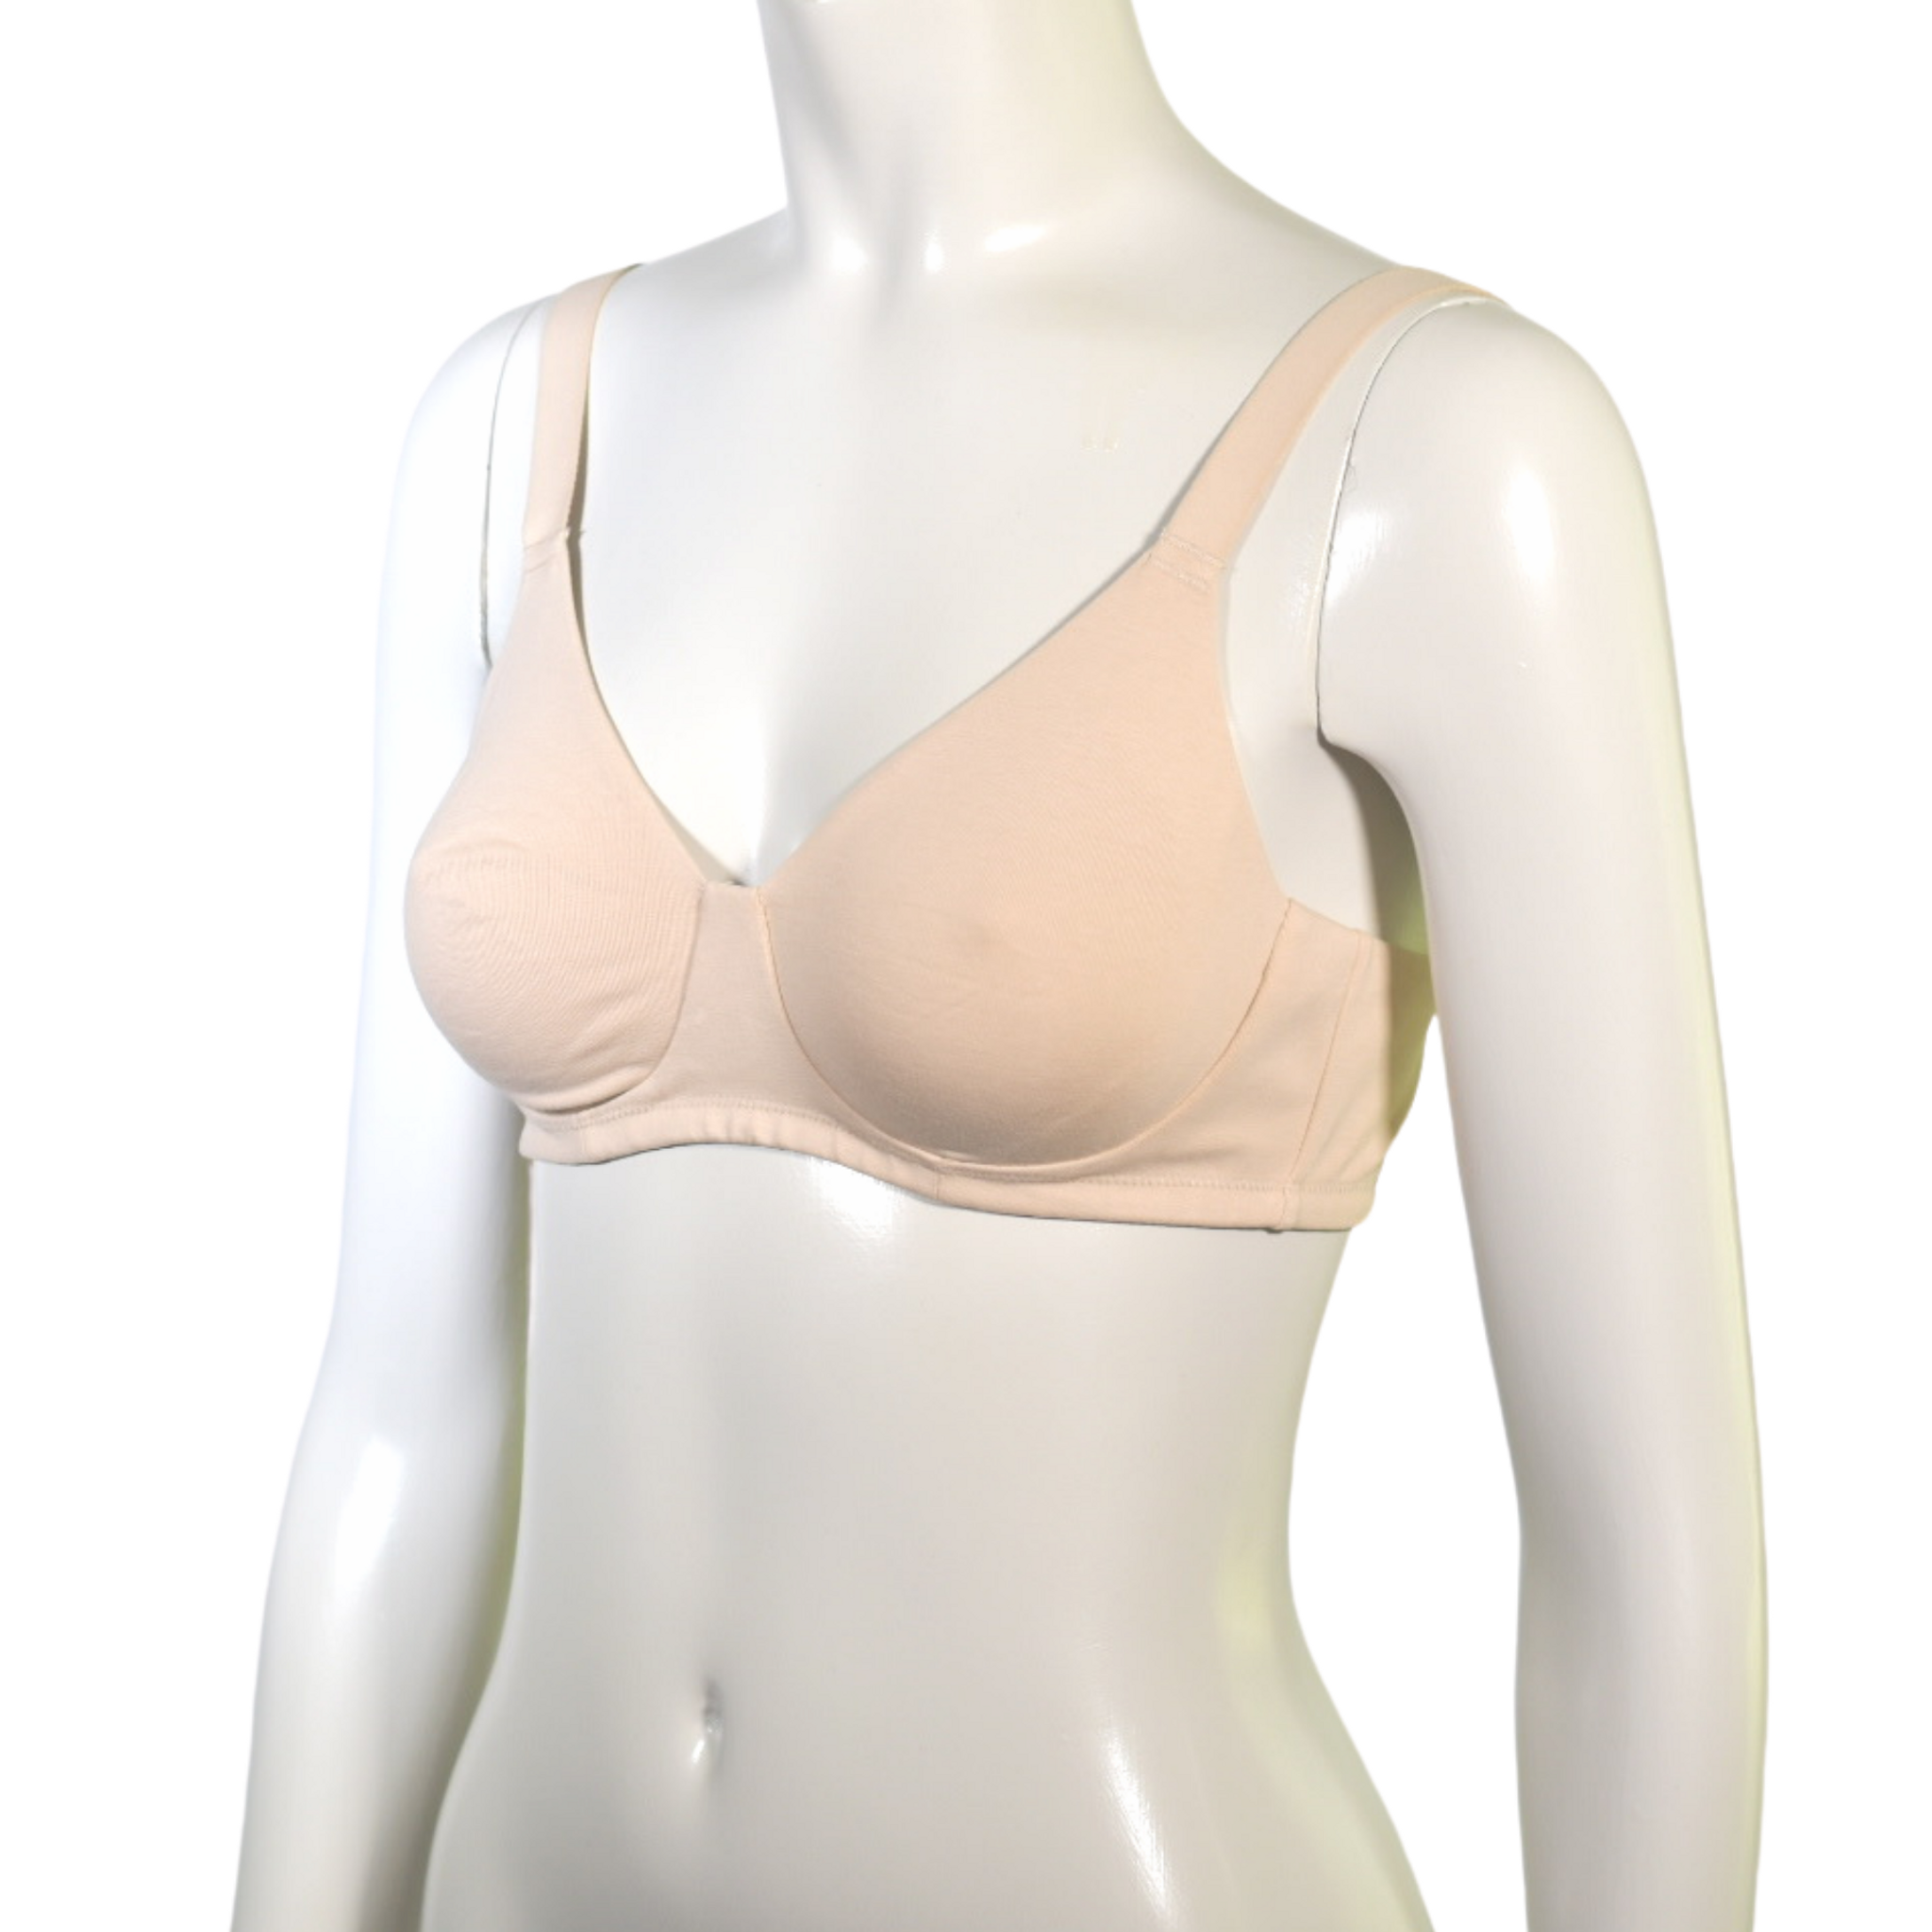 American Breast Care Women's Soft Cup Bra White 34C